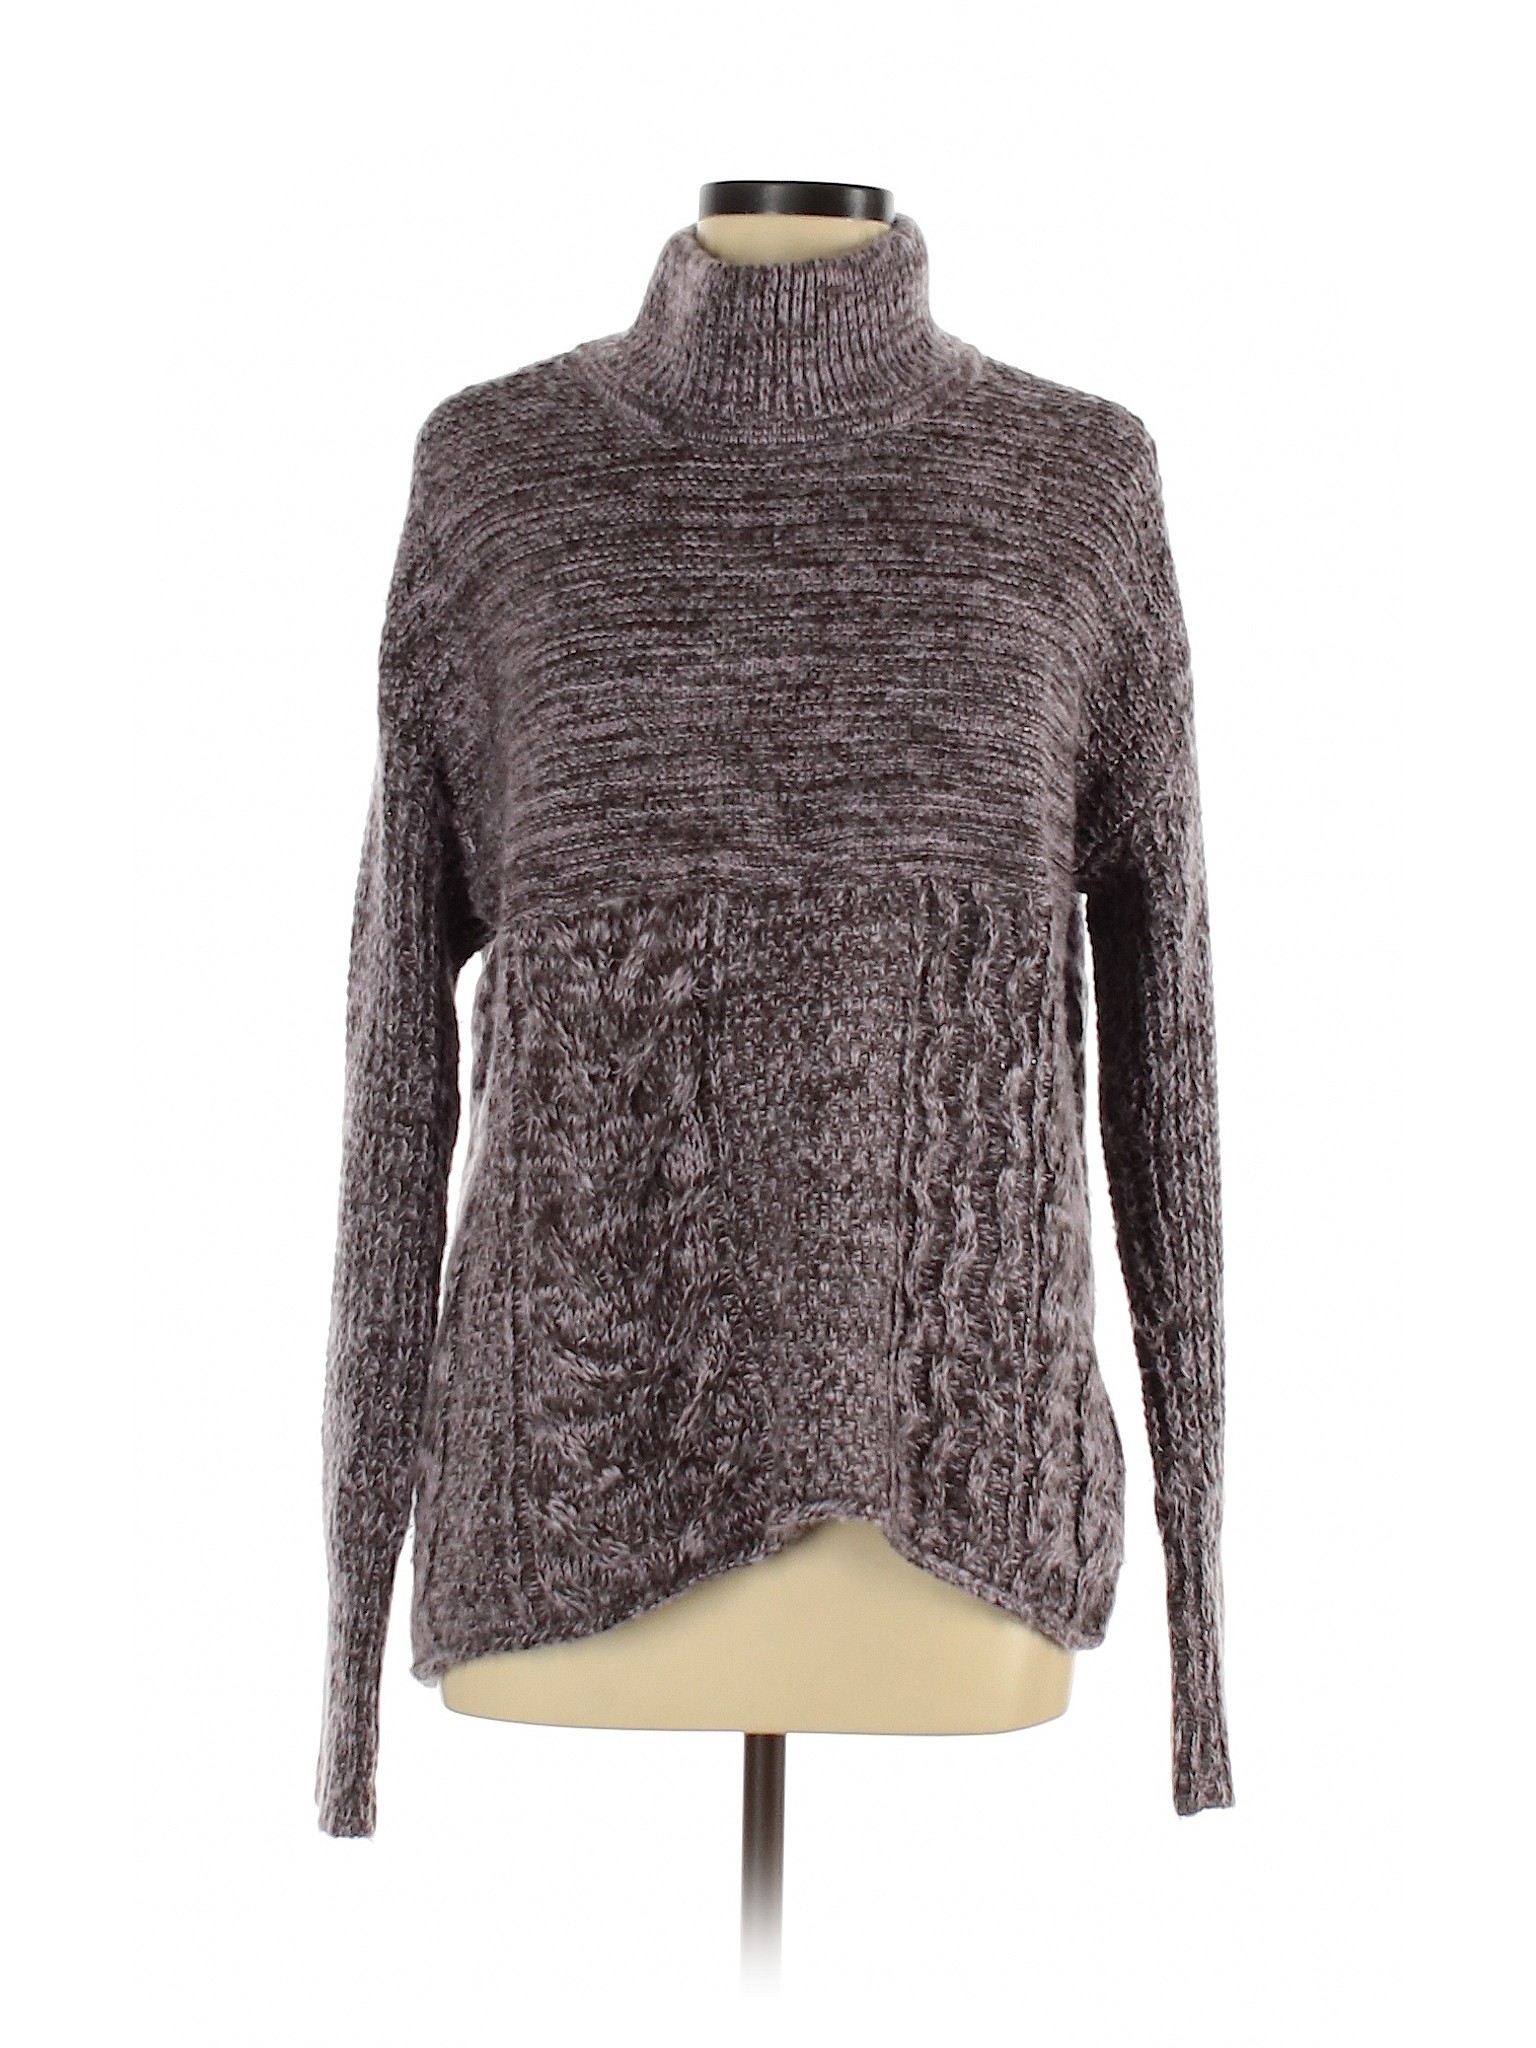 Simply Vera Vera Wang Women Purple Pullover Sweater M | eBay